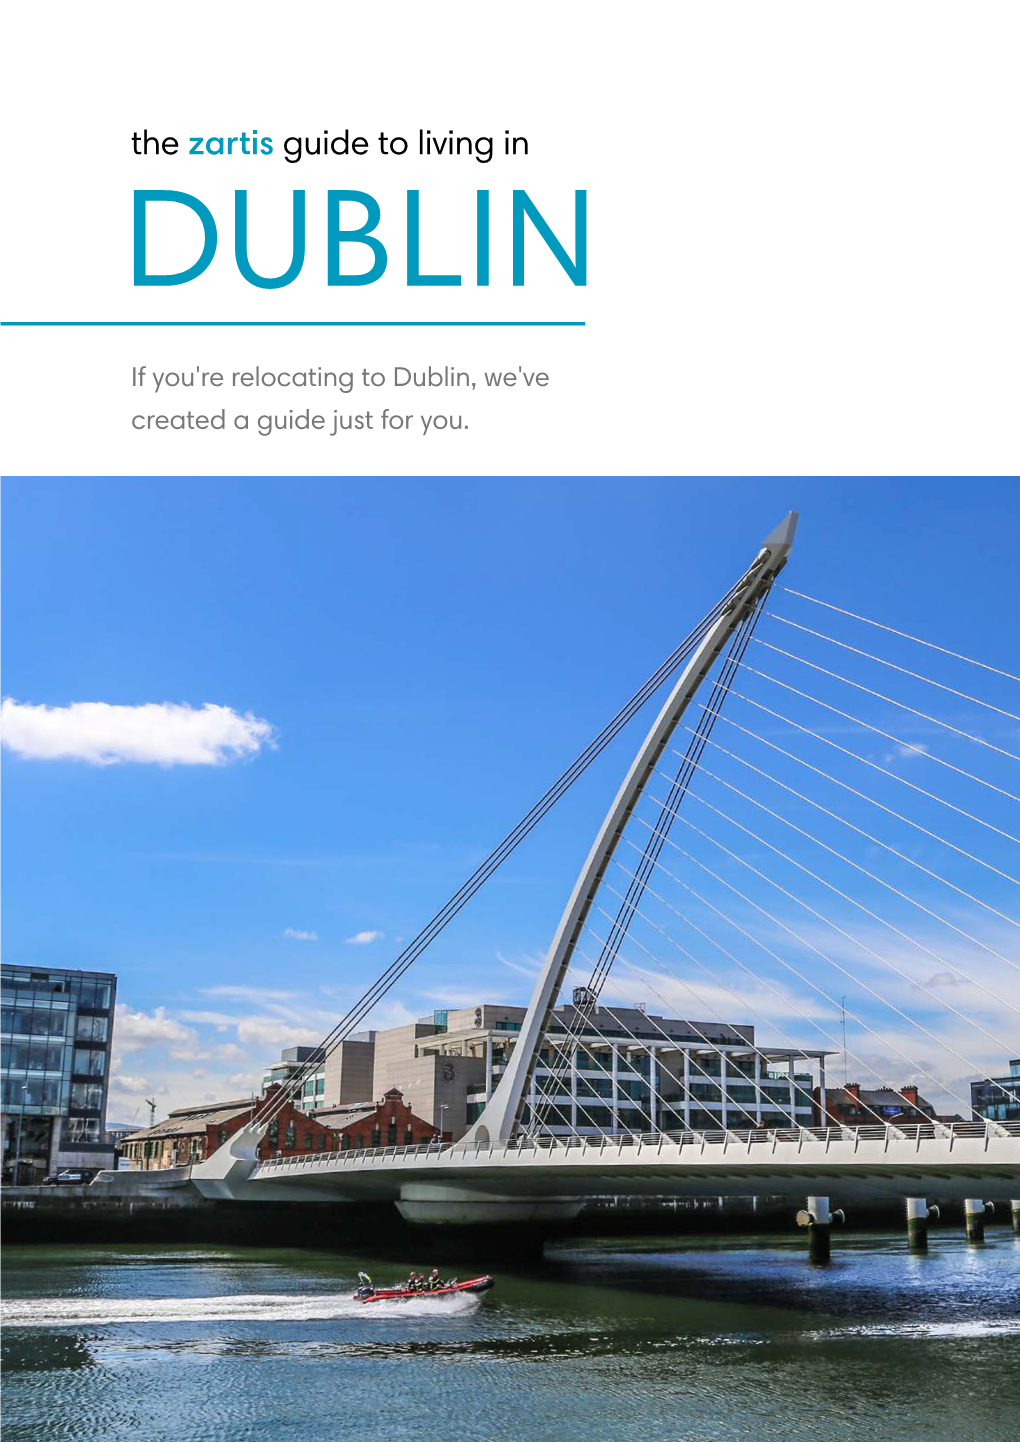 The Zartis Guide to Living in DUBLIN